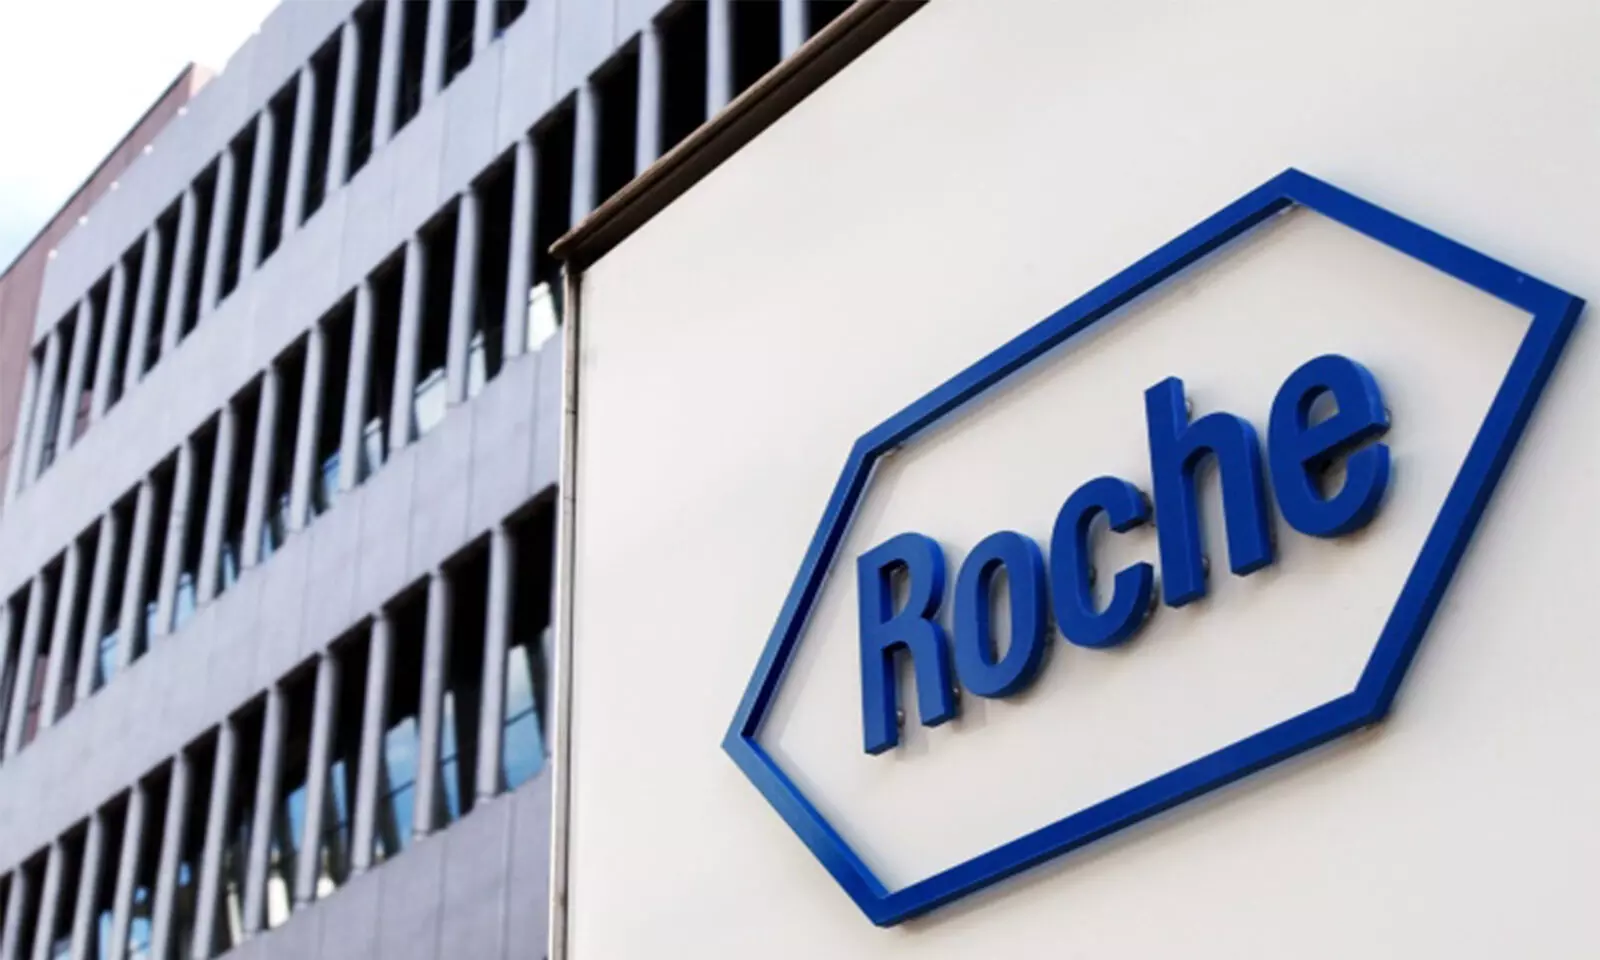 Roche loses money in Russia, says Chief Executive Severin Schwan